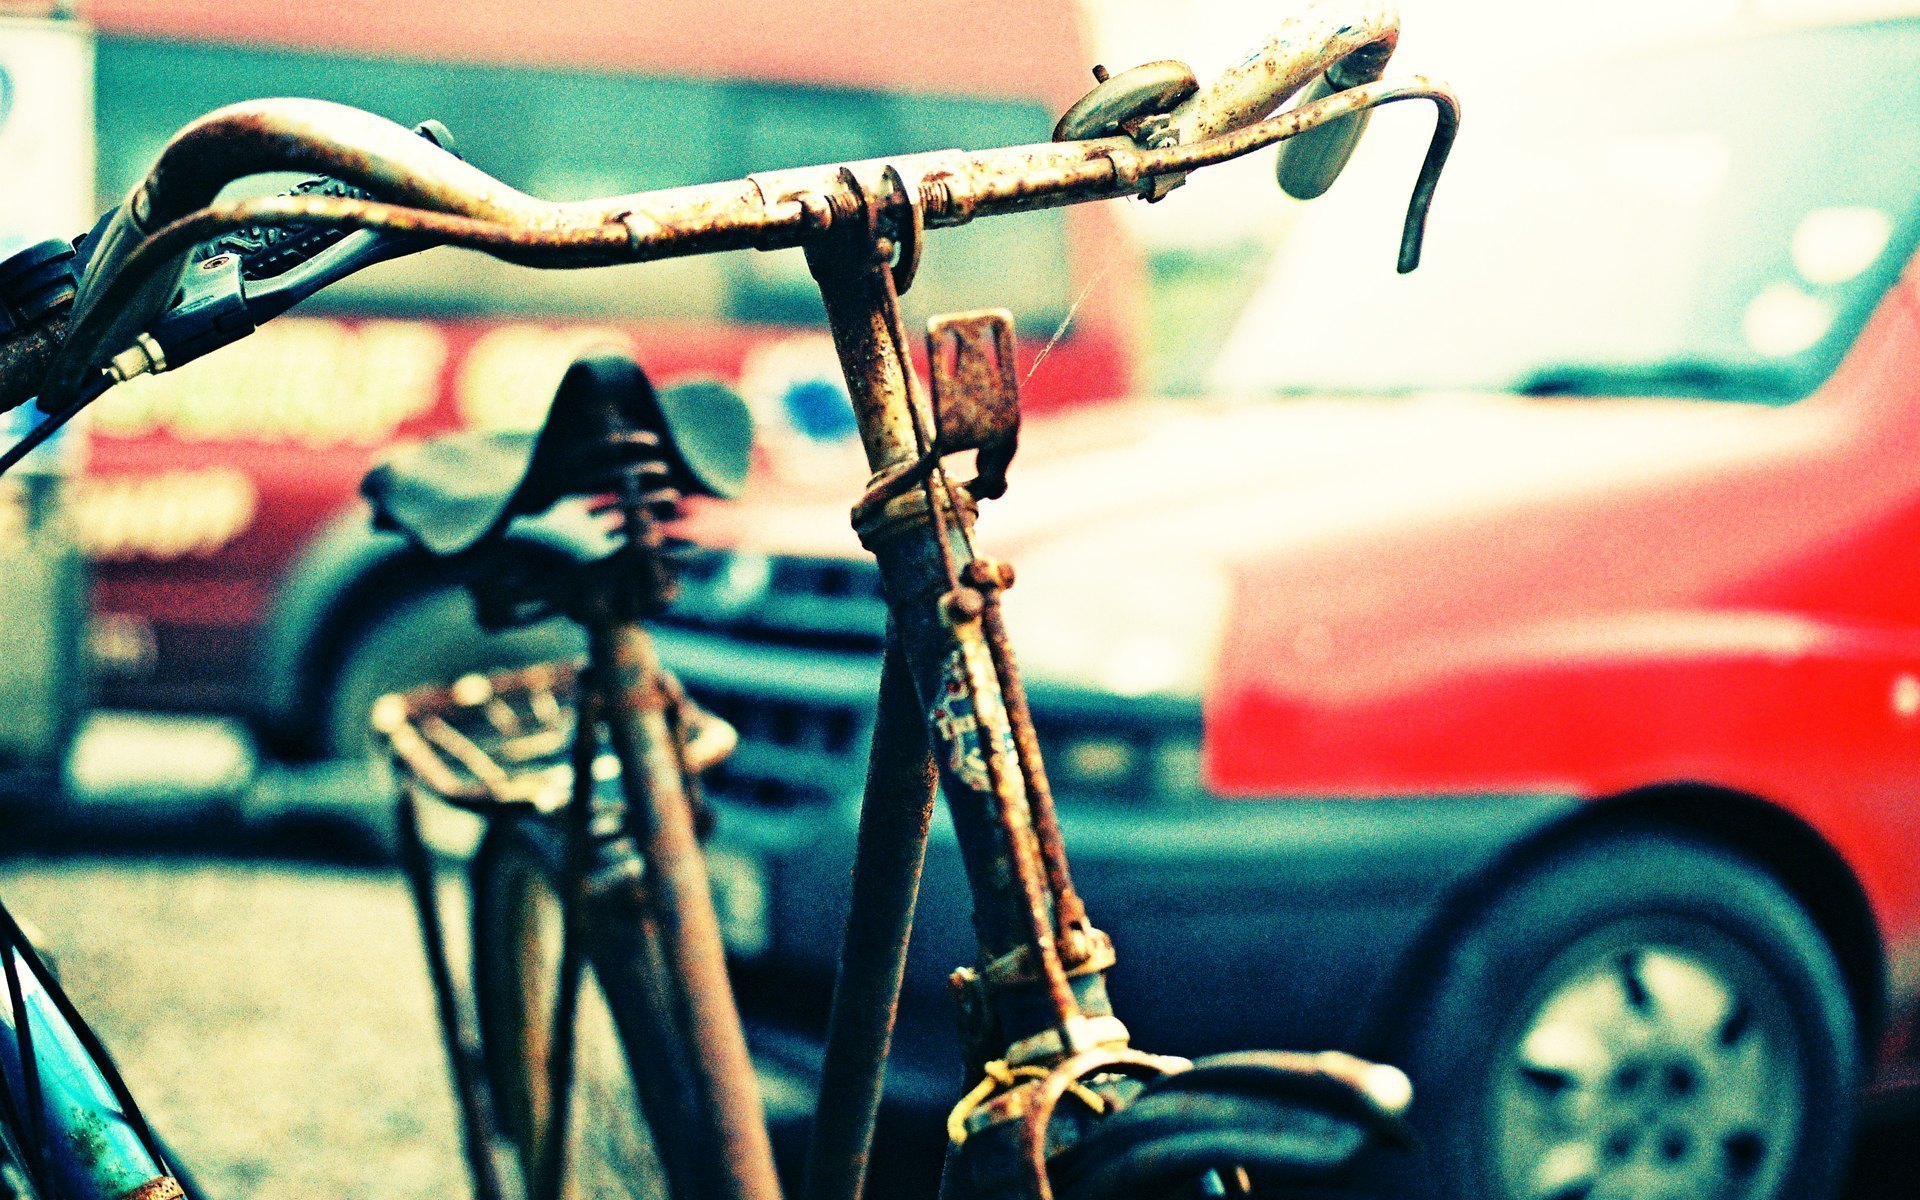 Descarga gratuita de fondo de pantalla para móvil de Bicicleta, Vehículos.